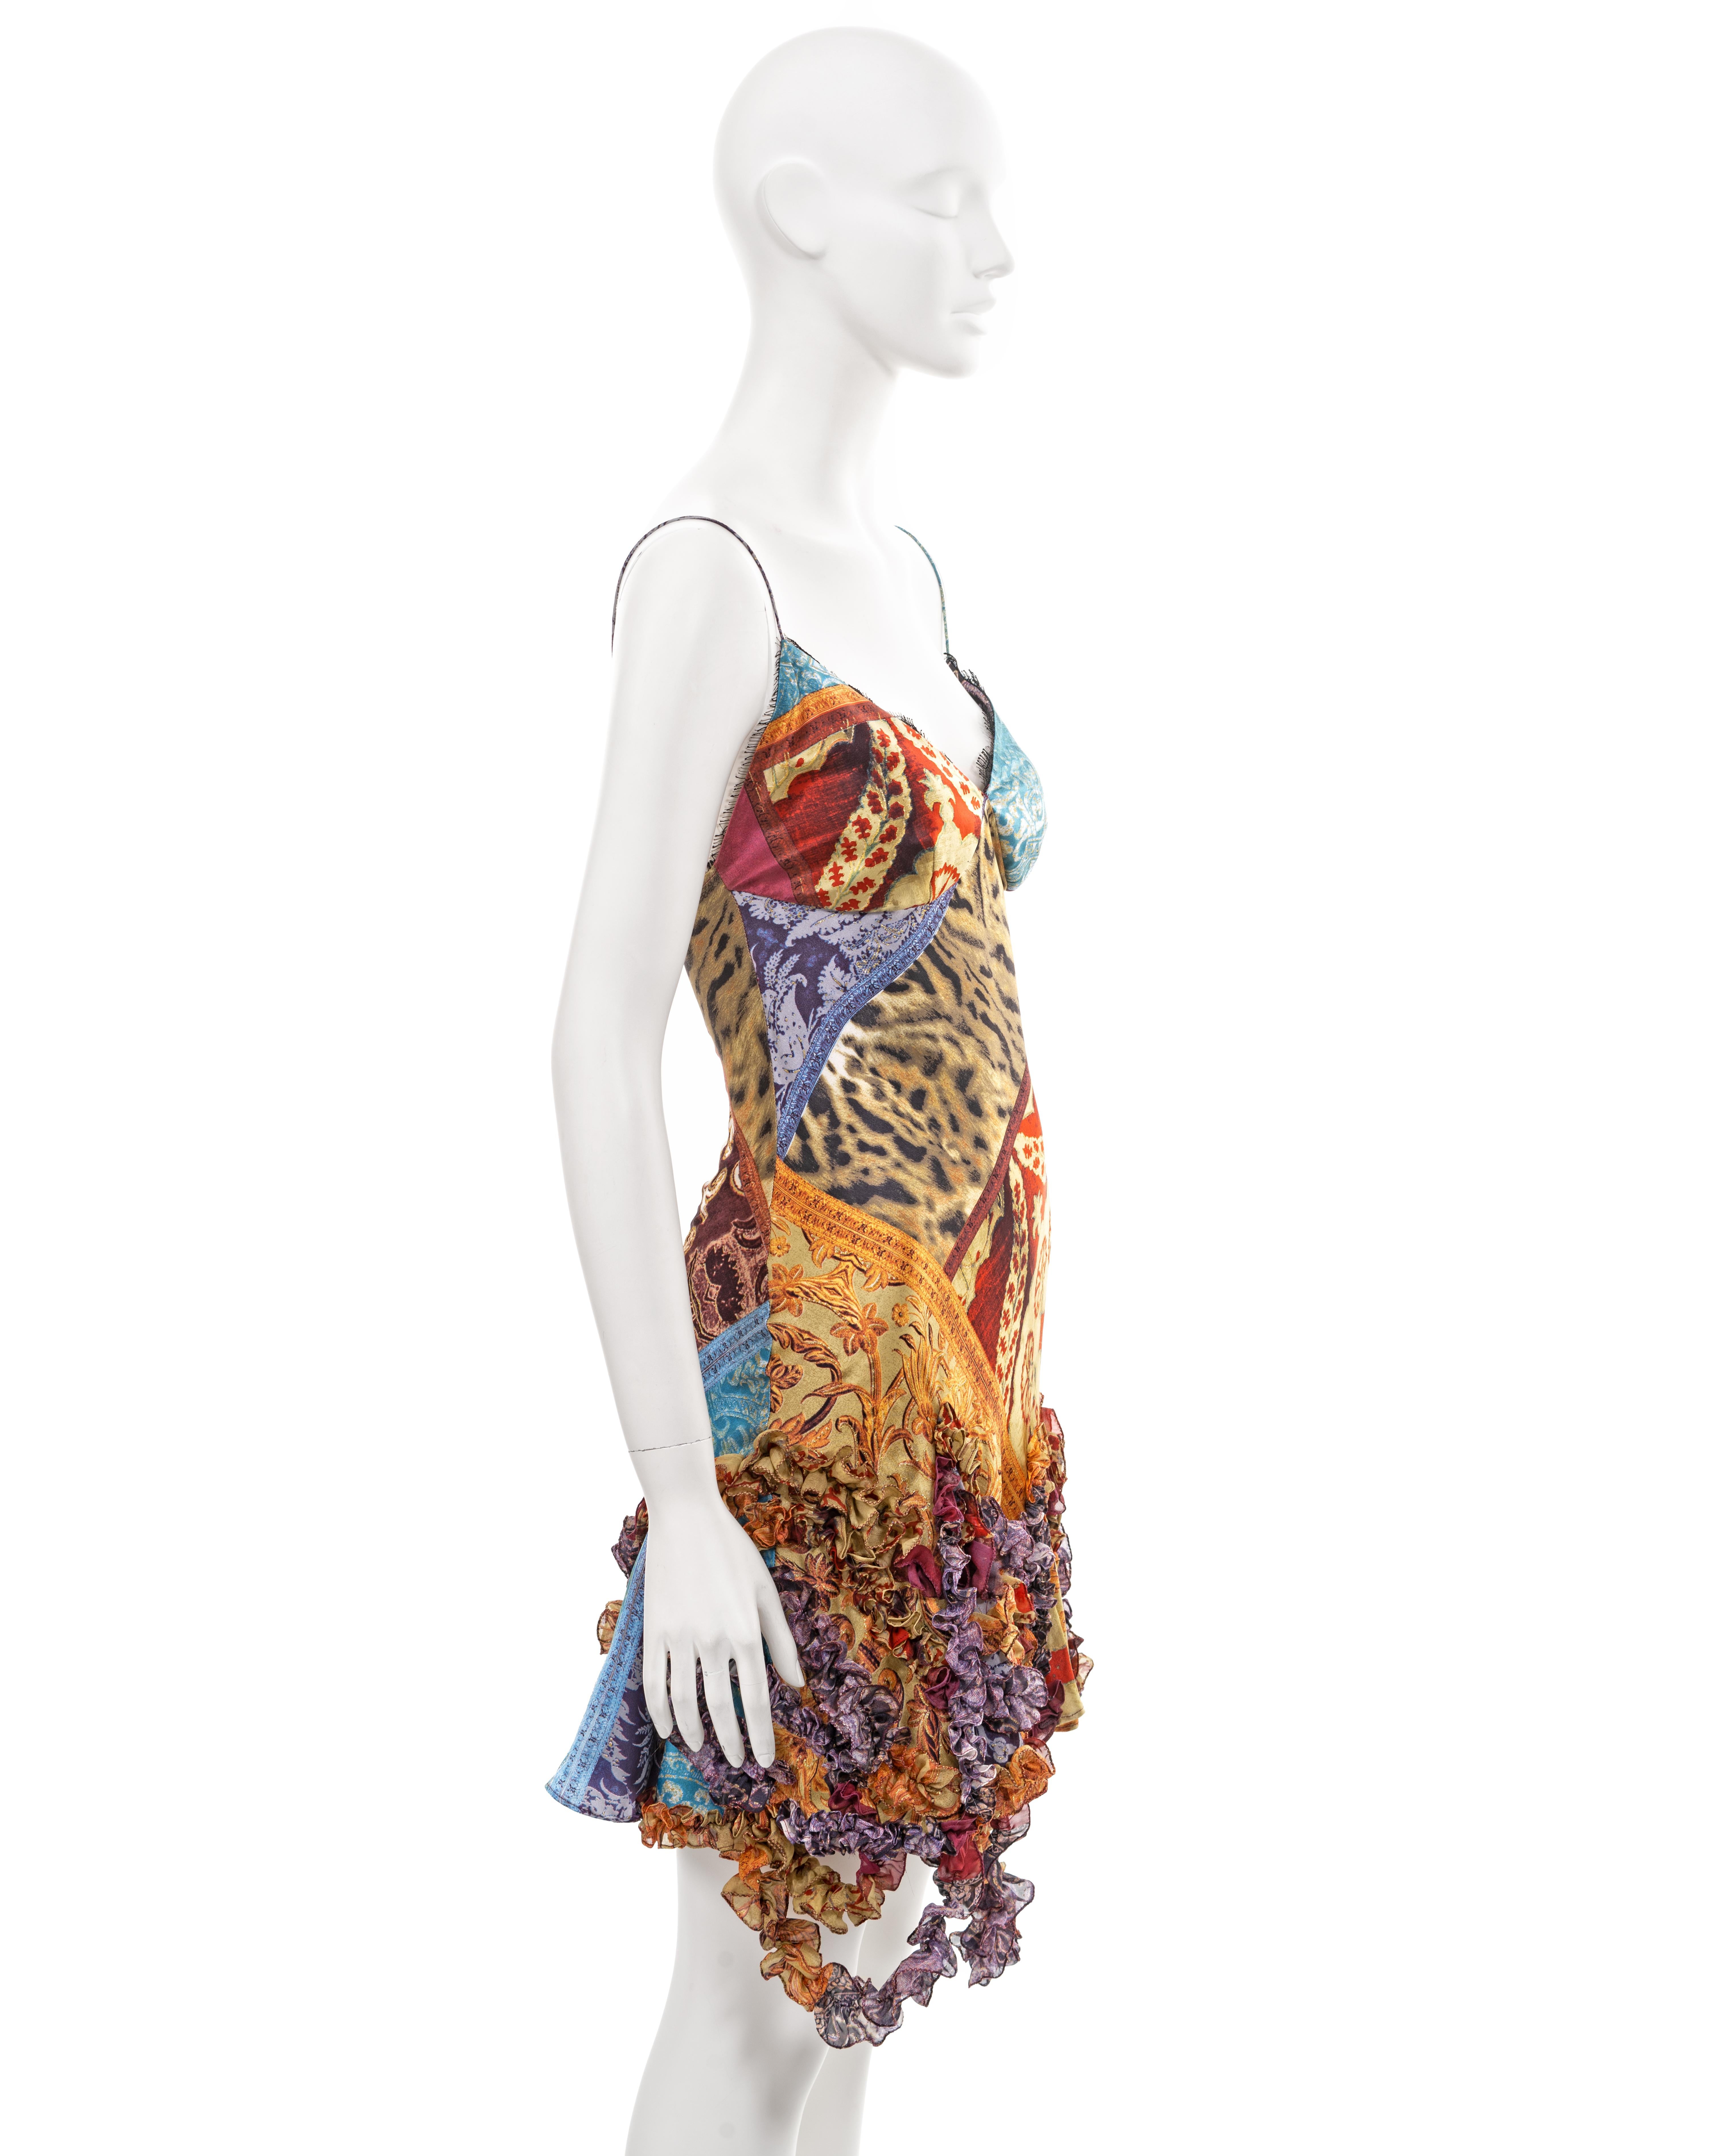 Roberto Cavalli brocade printed silk evening dress with ruffled skirt, fw 2004 For Sale 2